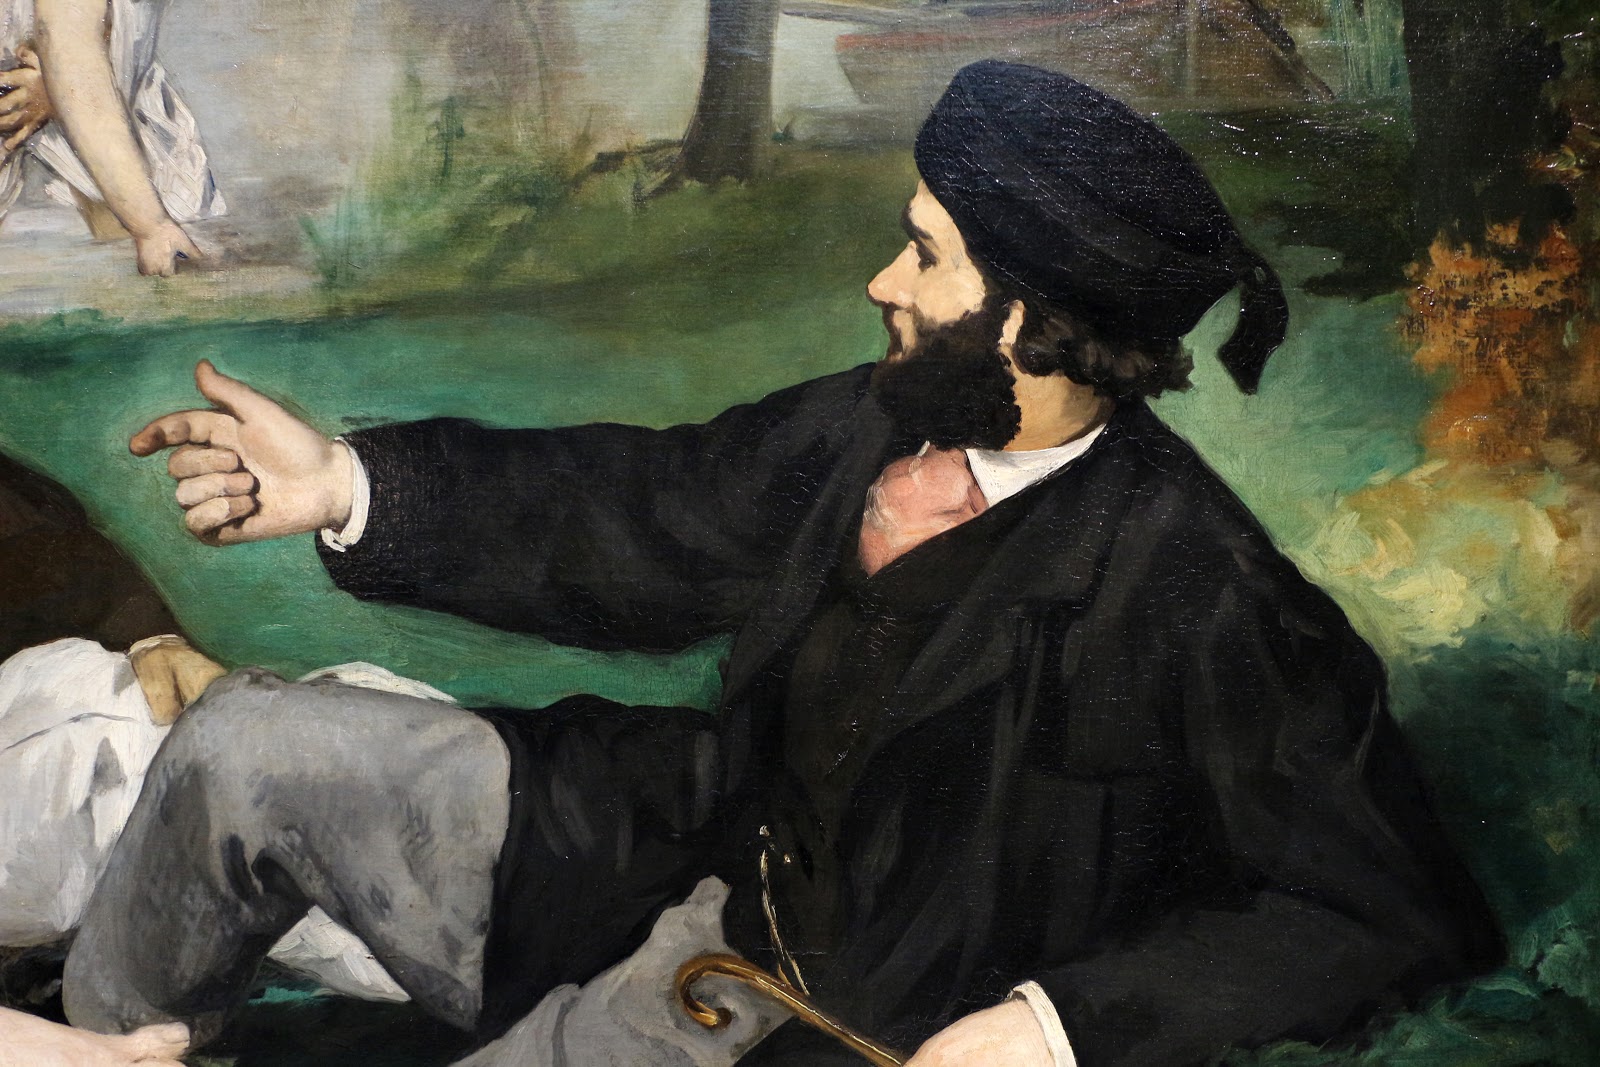 Edouard+Manet-1832-1883 (171).jpg